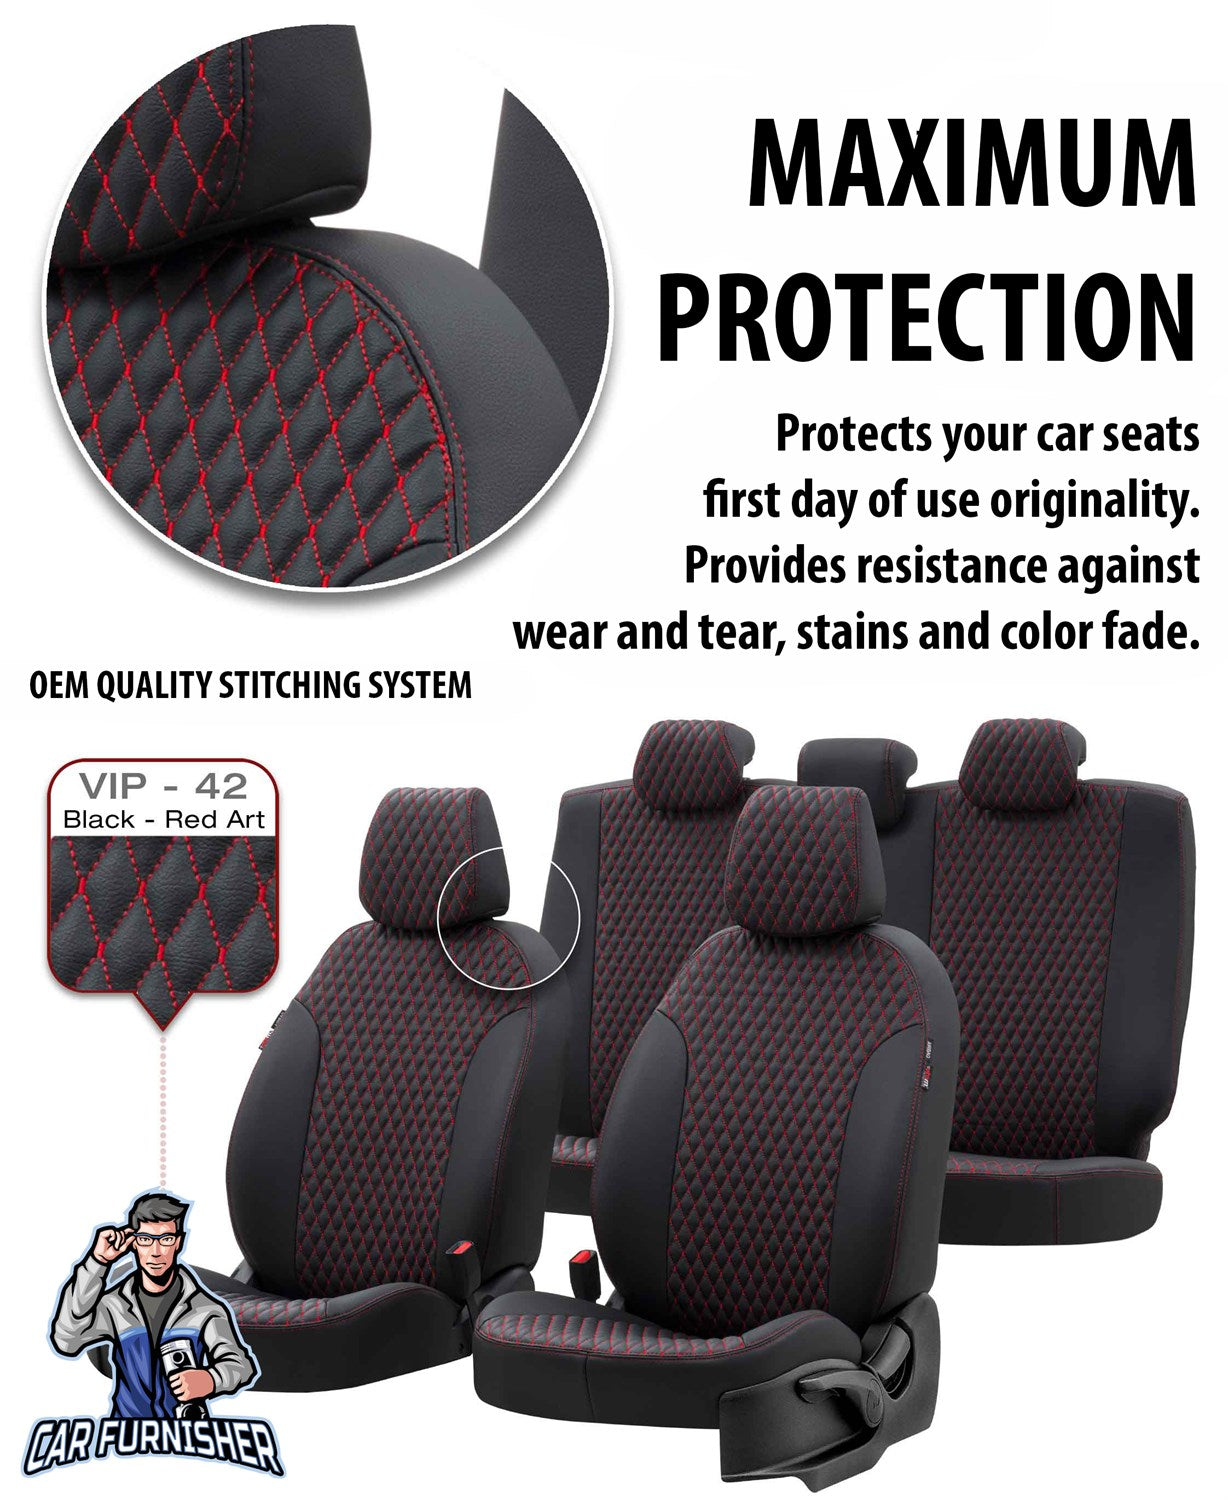 Audi Q5 Seat Cover Amsterdam Leather Design Black Leather